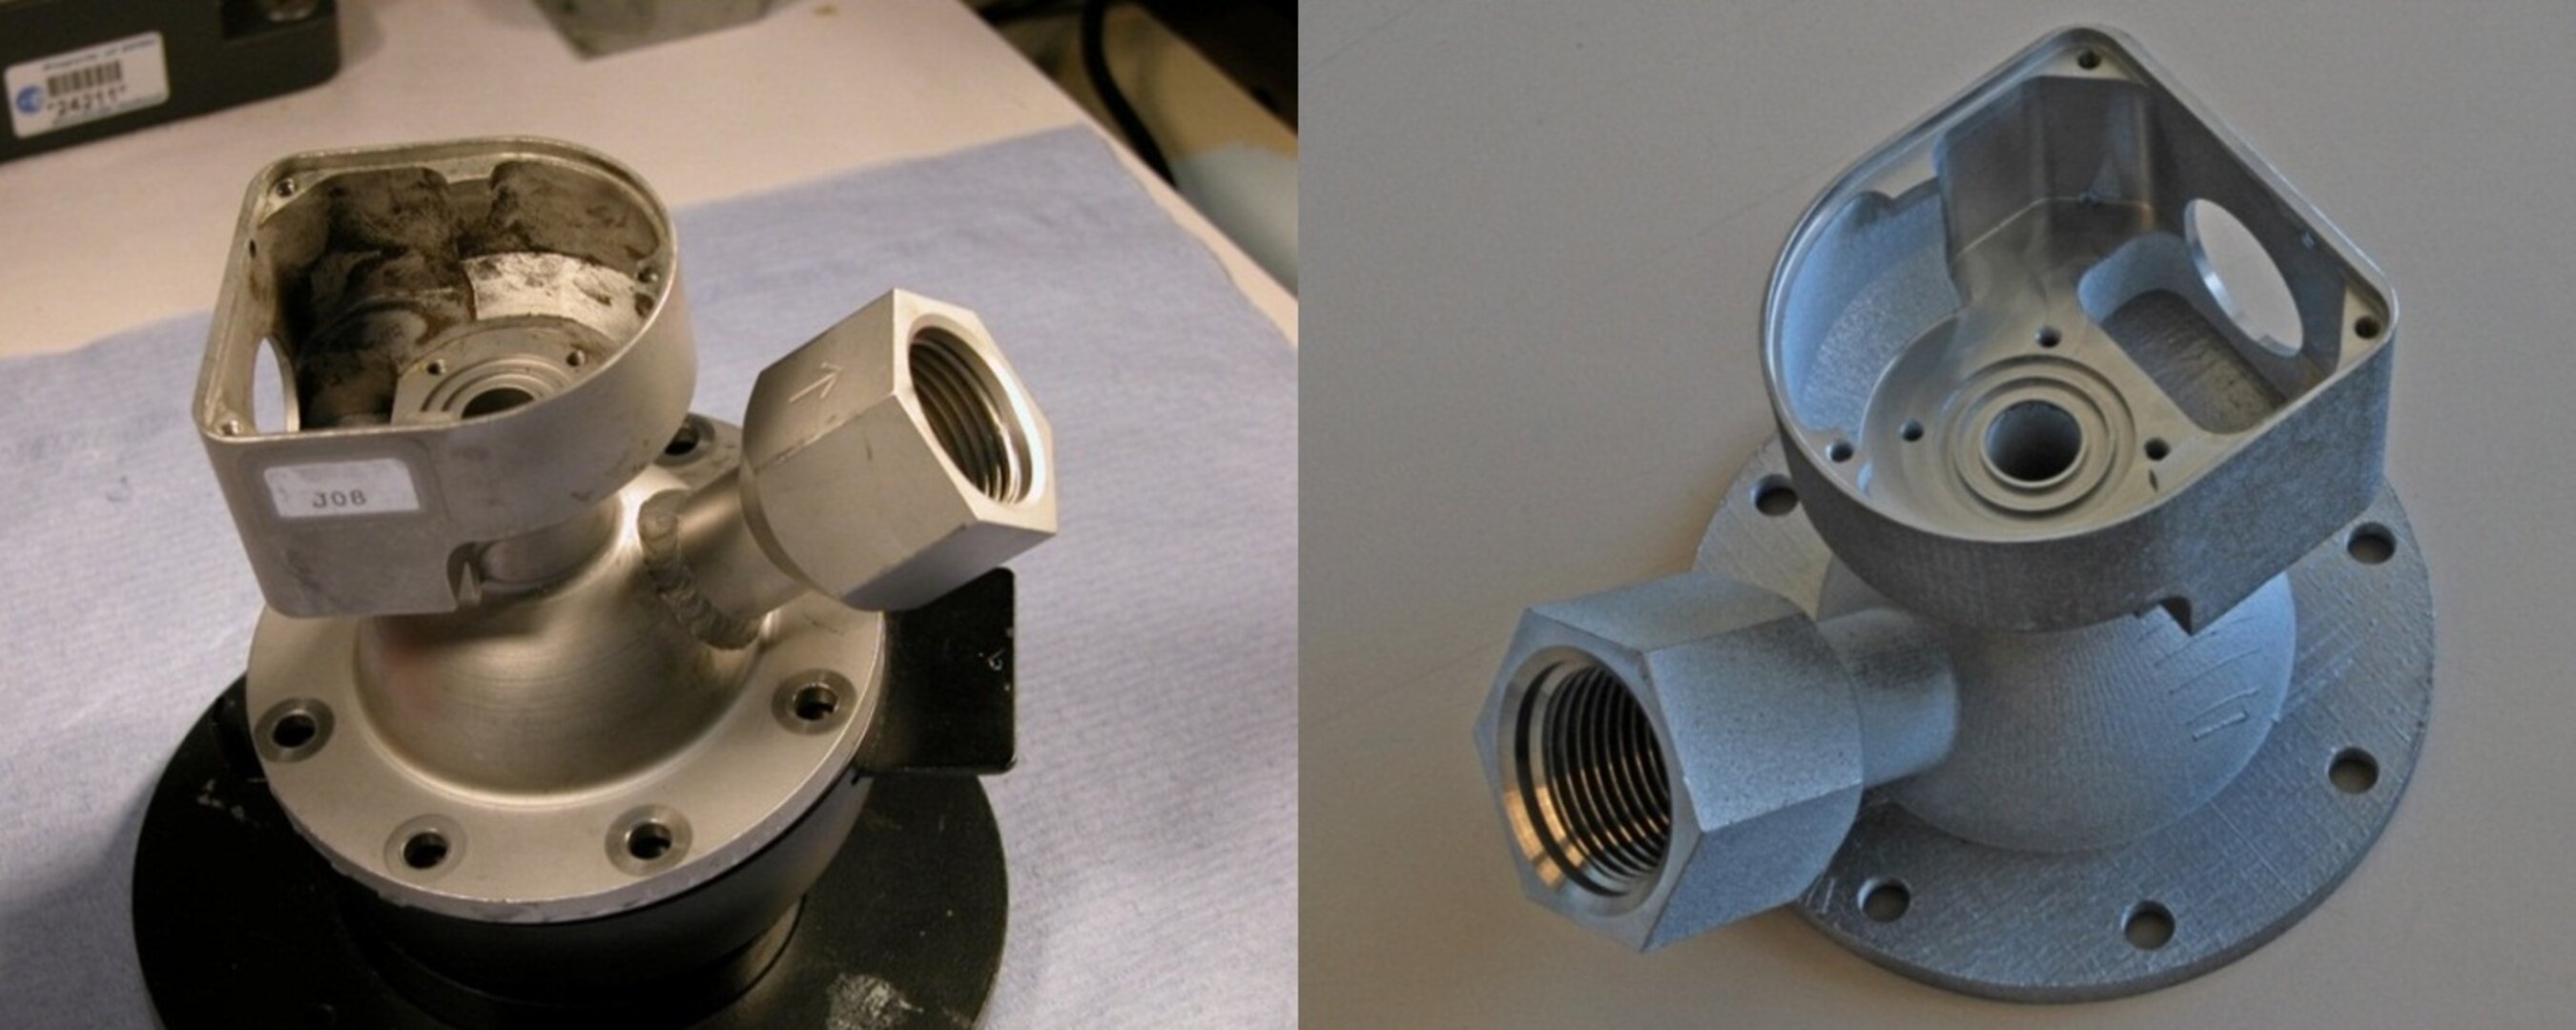 Original and 3D-printed 'woov' valve